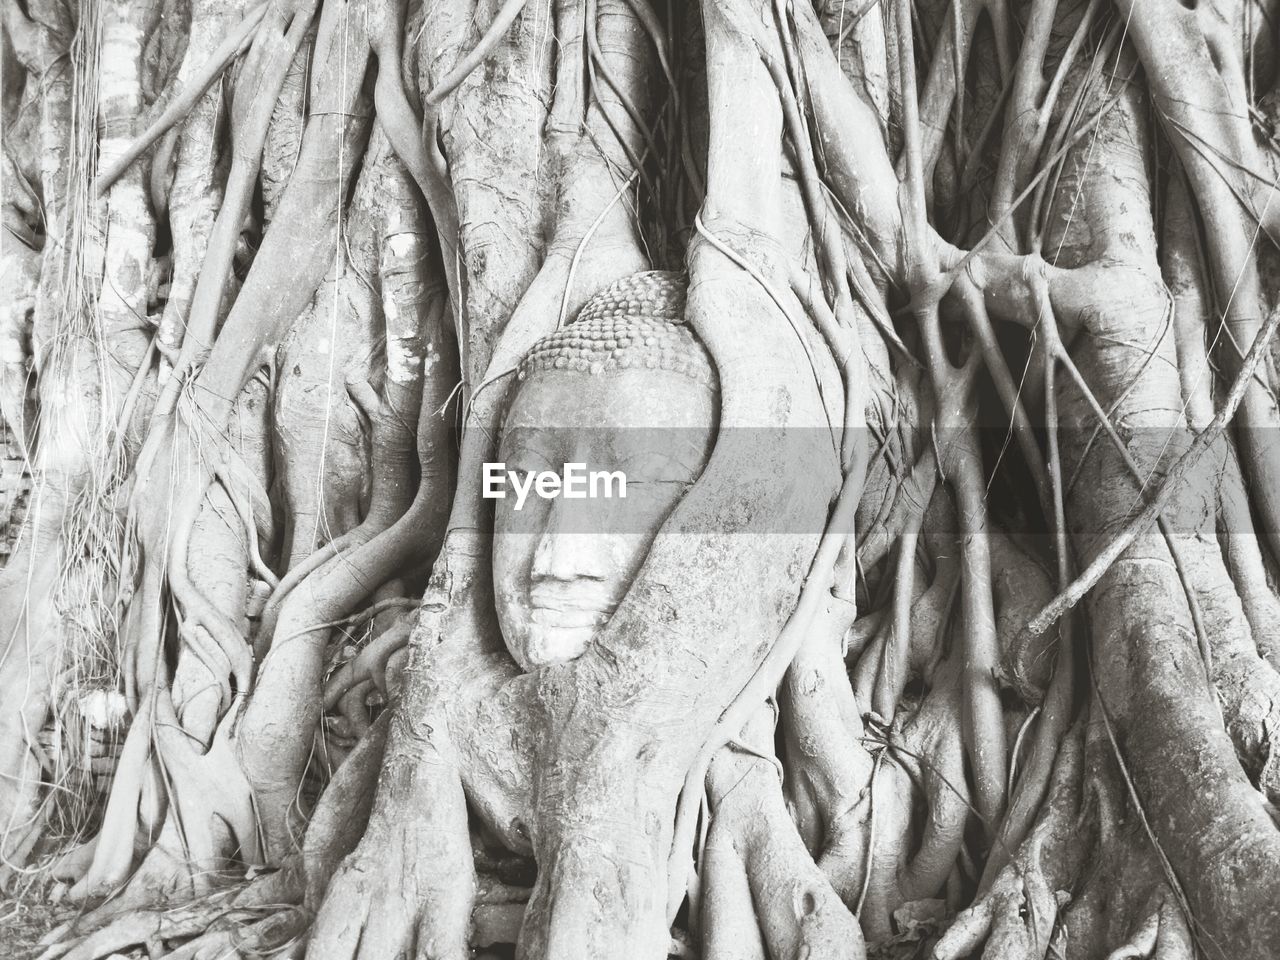 Human face among roots